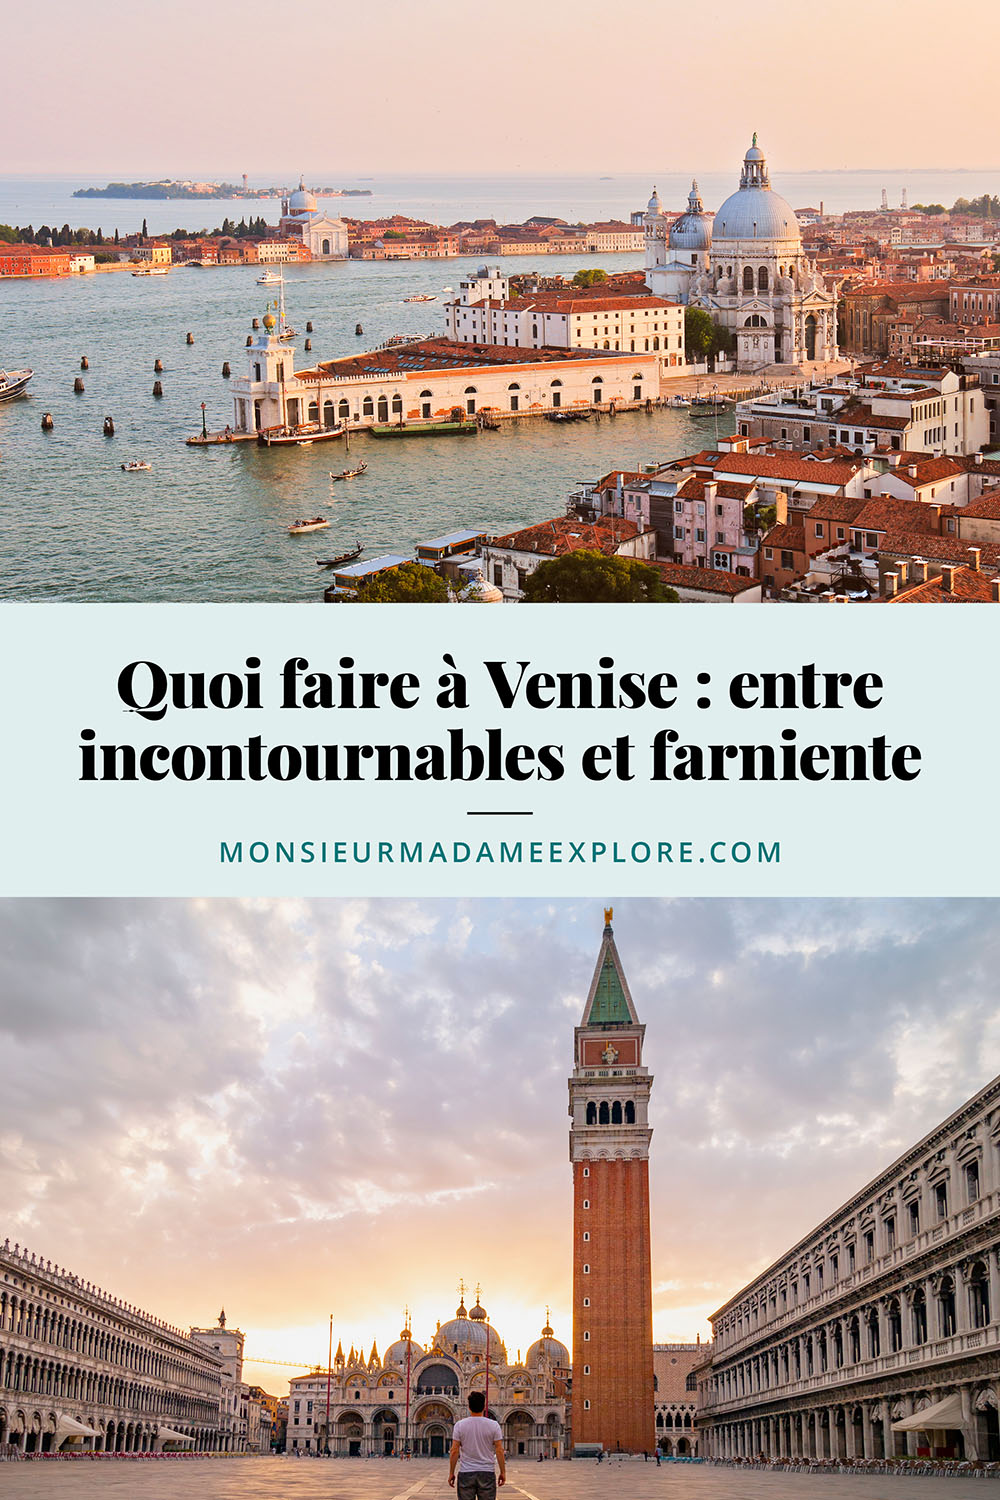 Quoi faire à Venise : entre incontournables et farniente, Monsieur+Madame Explore, Blogue de voyage, Italie / What to do and what to see in Venice, Italy